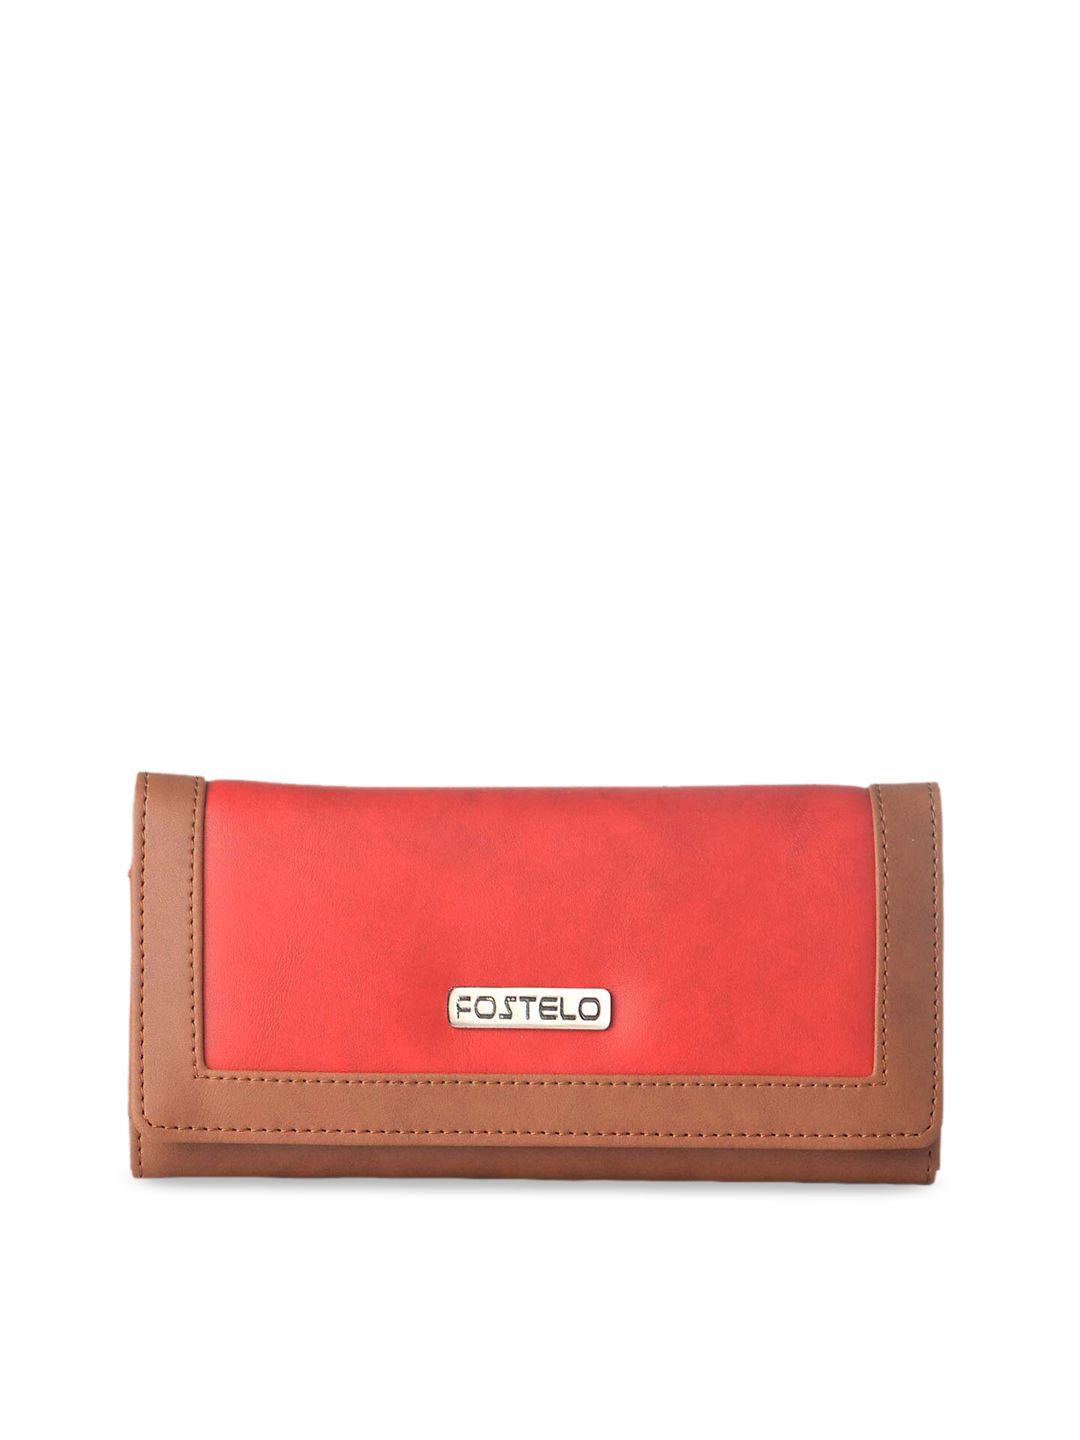 fostelo women red & brown solid foldover clutch